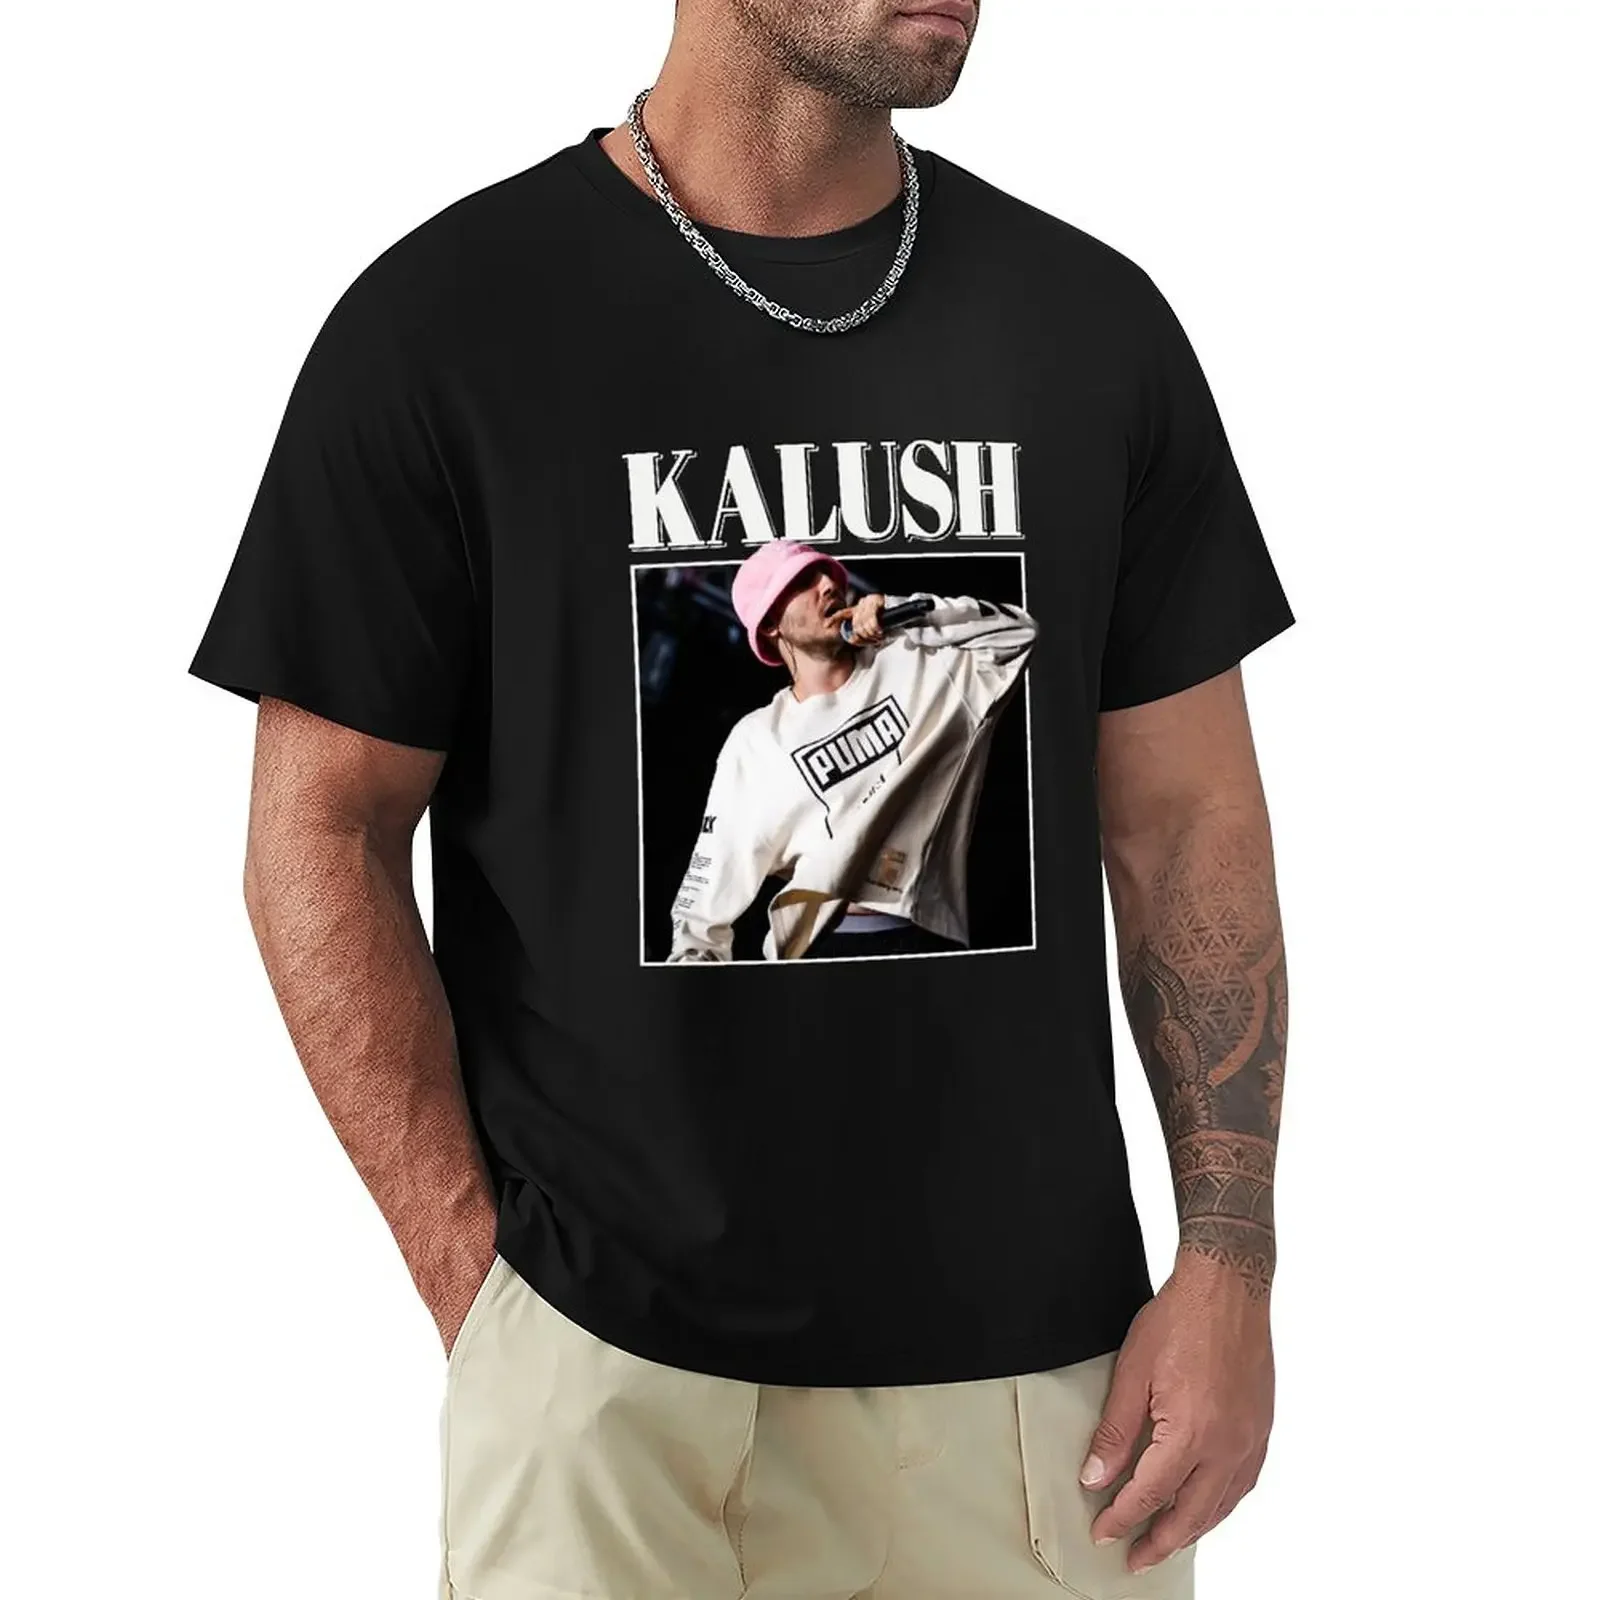 

Kalush Orchestra Stefania T-Shirt Aesthetic clothing tees black t shirts for men